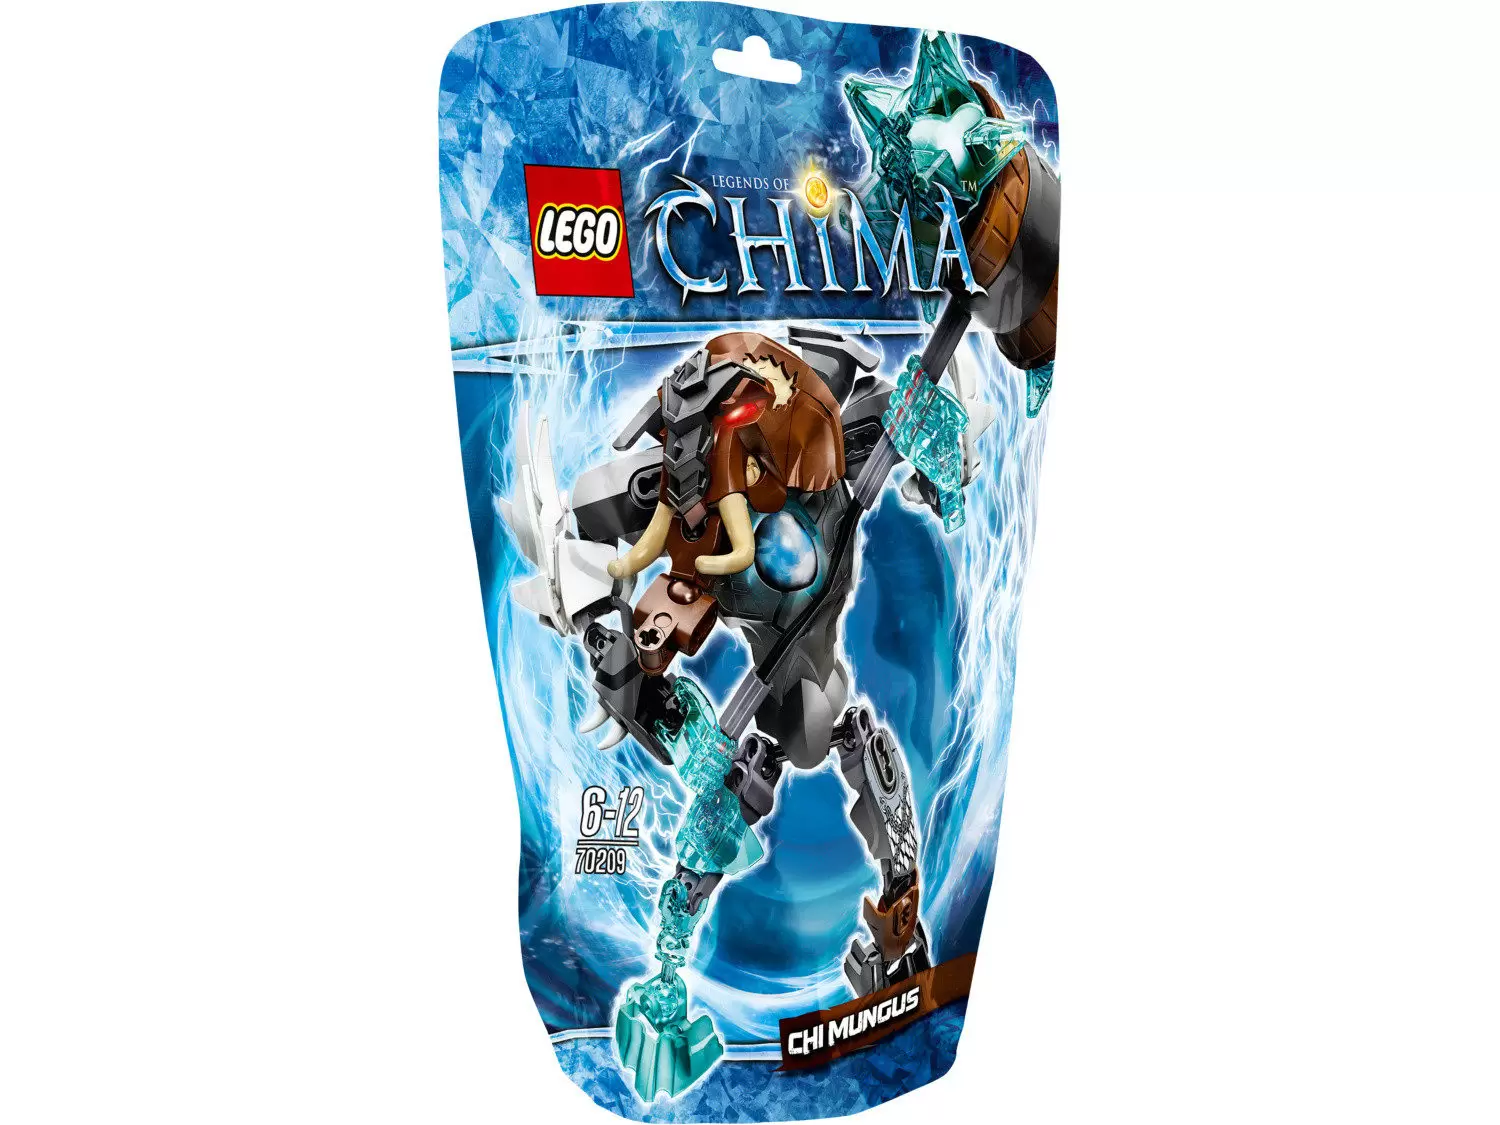 LEGO Legends of Chima - Chi Mungus